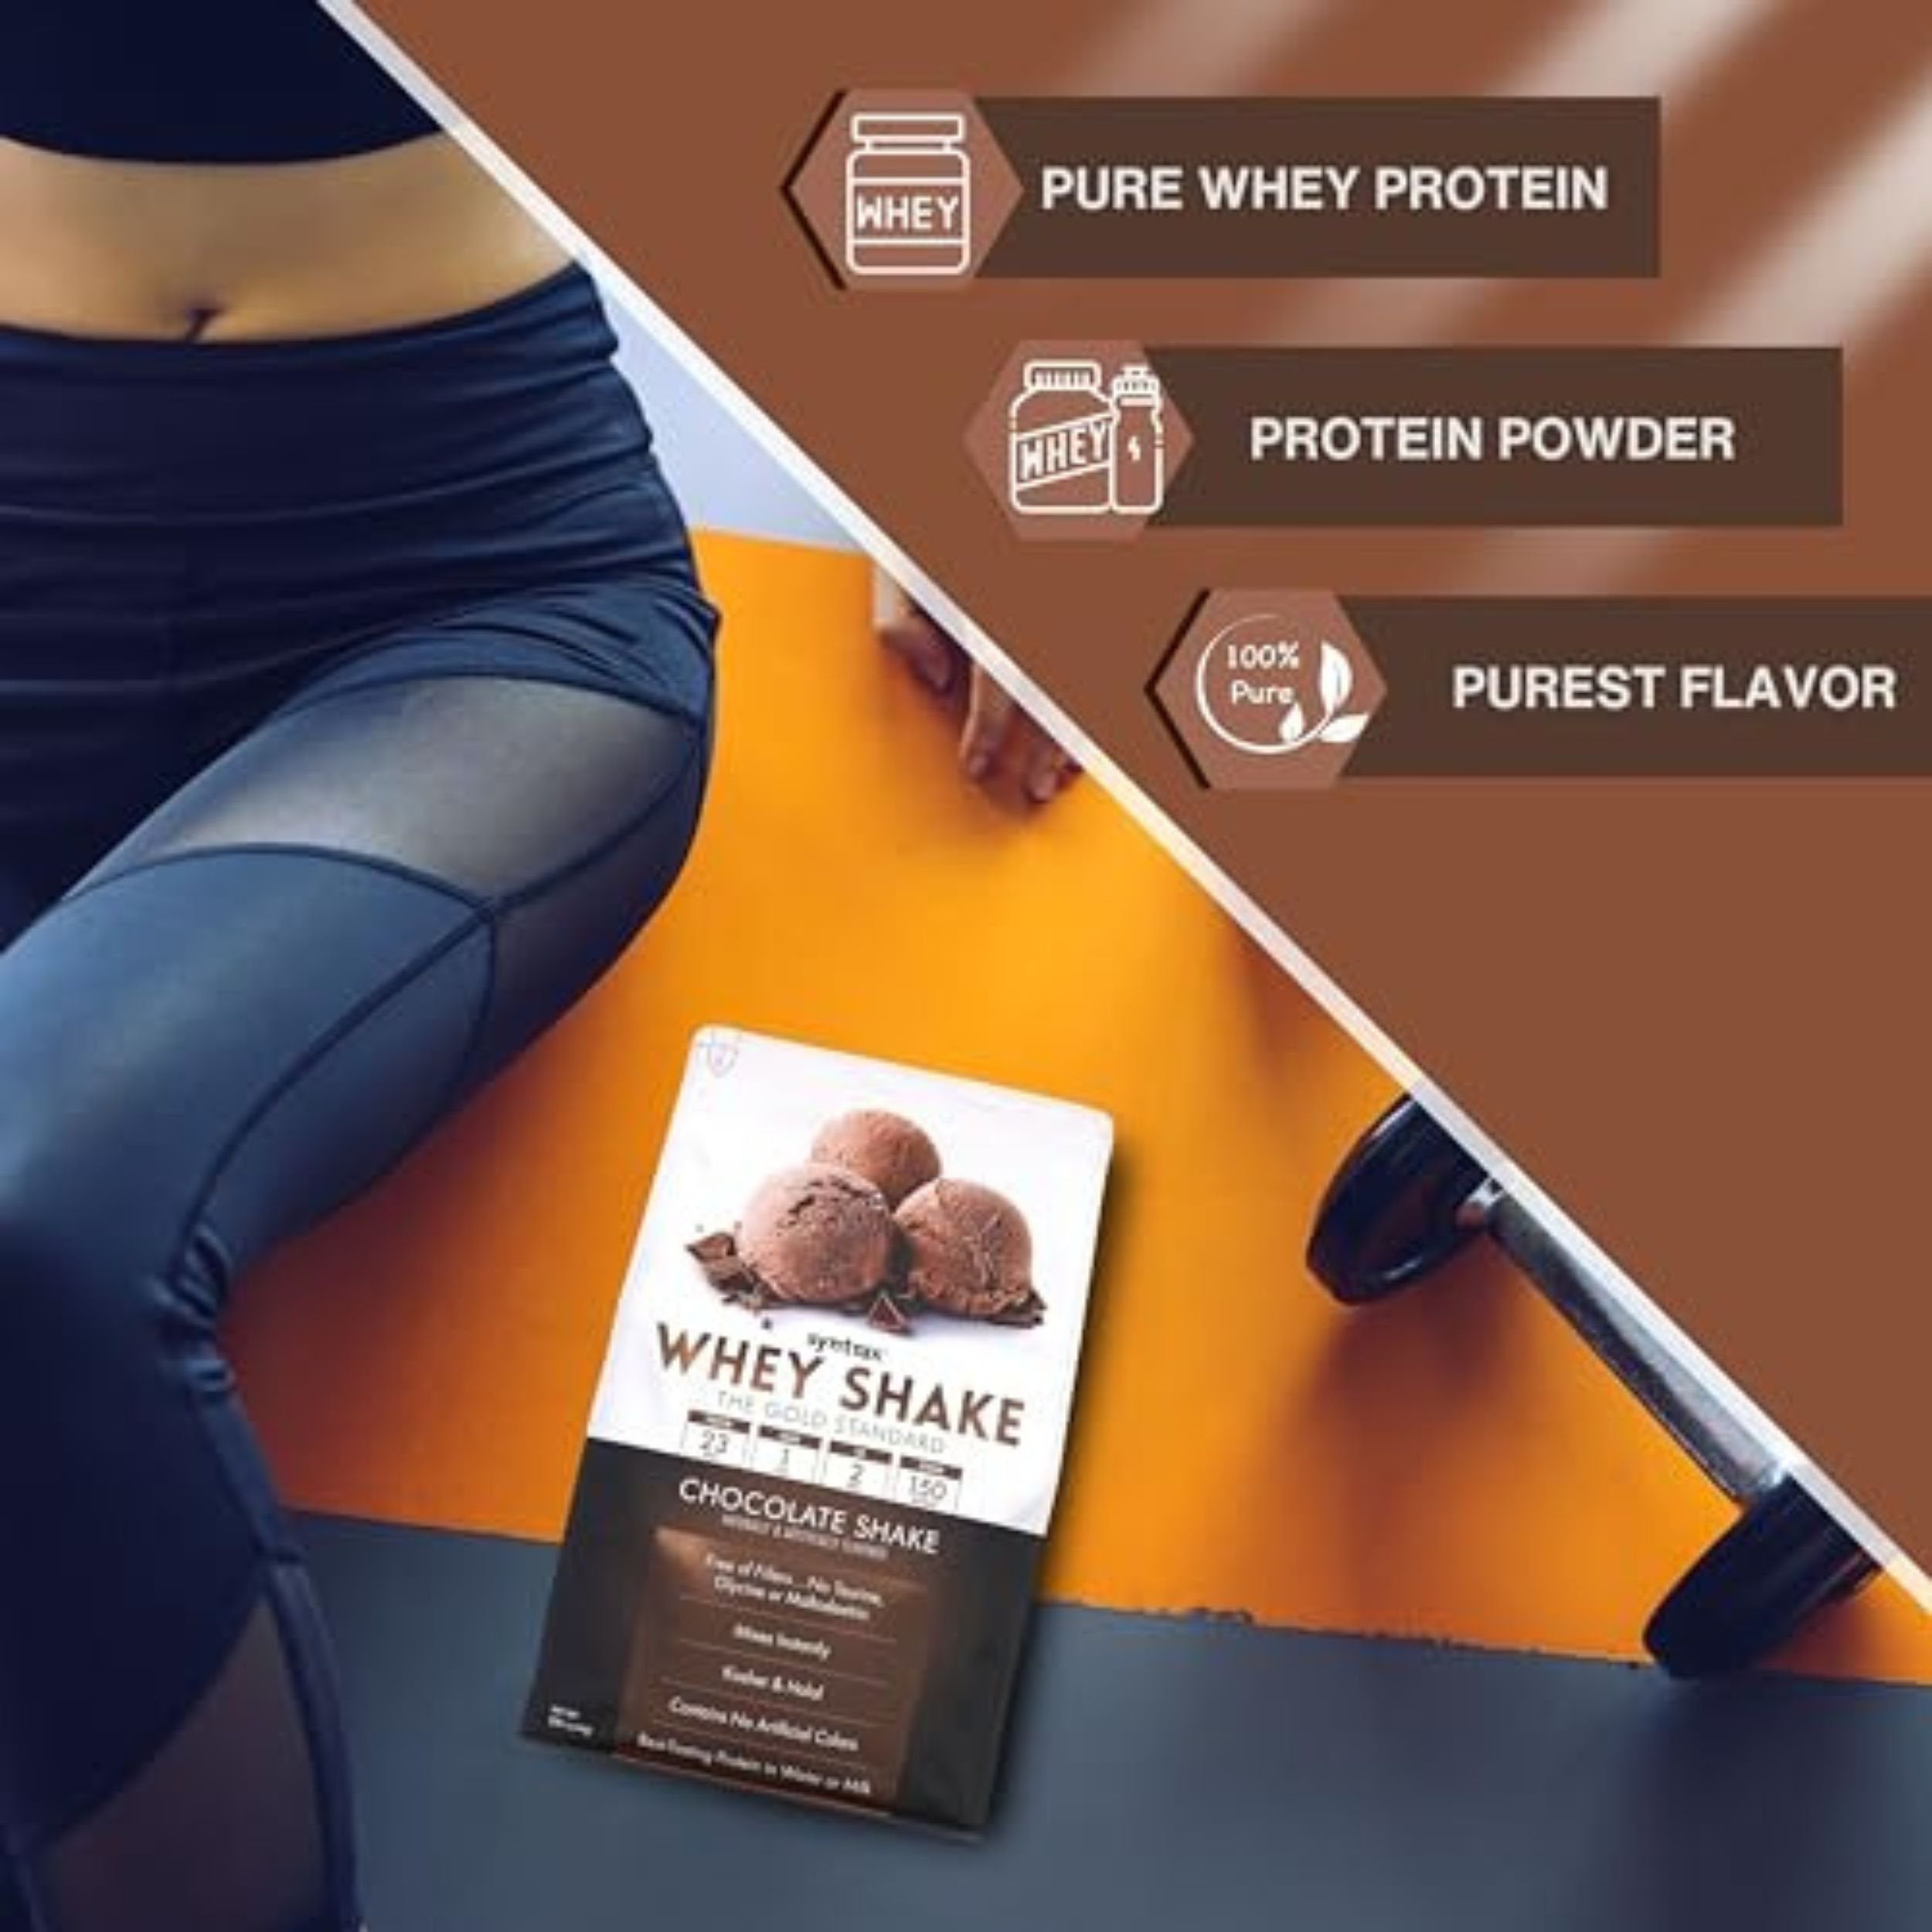 Worldwide Nutrition Chemix Whey Protein Isolate Vanilla Flavor- Pure W